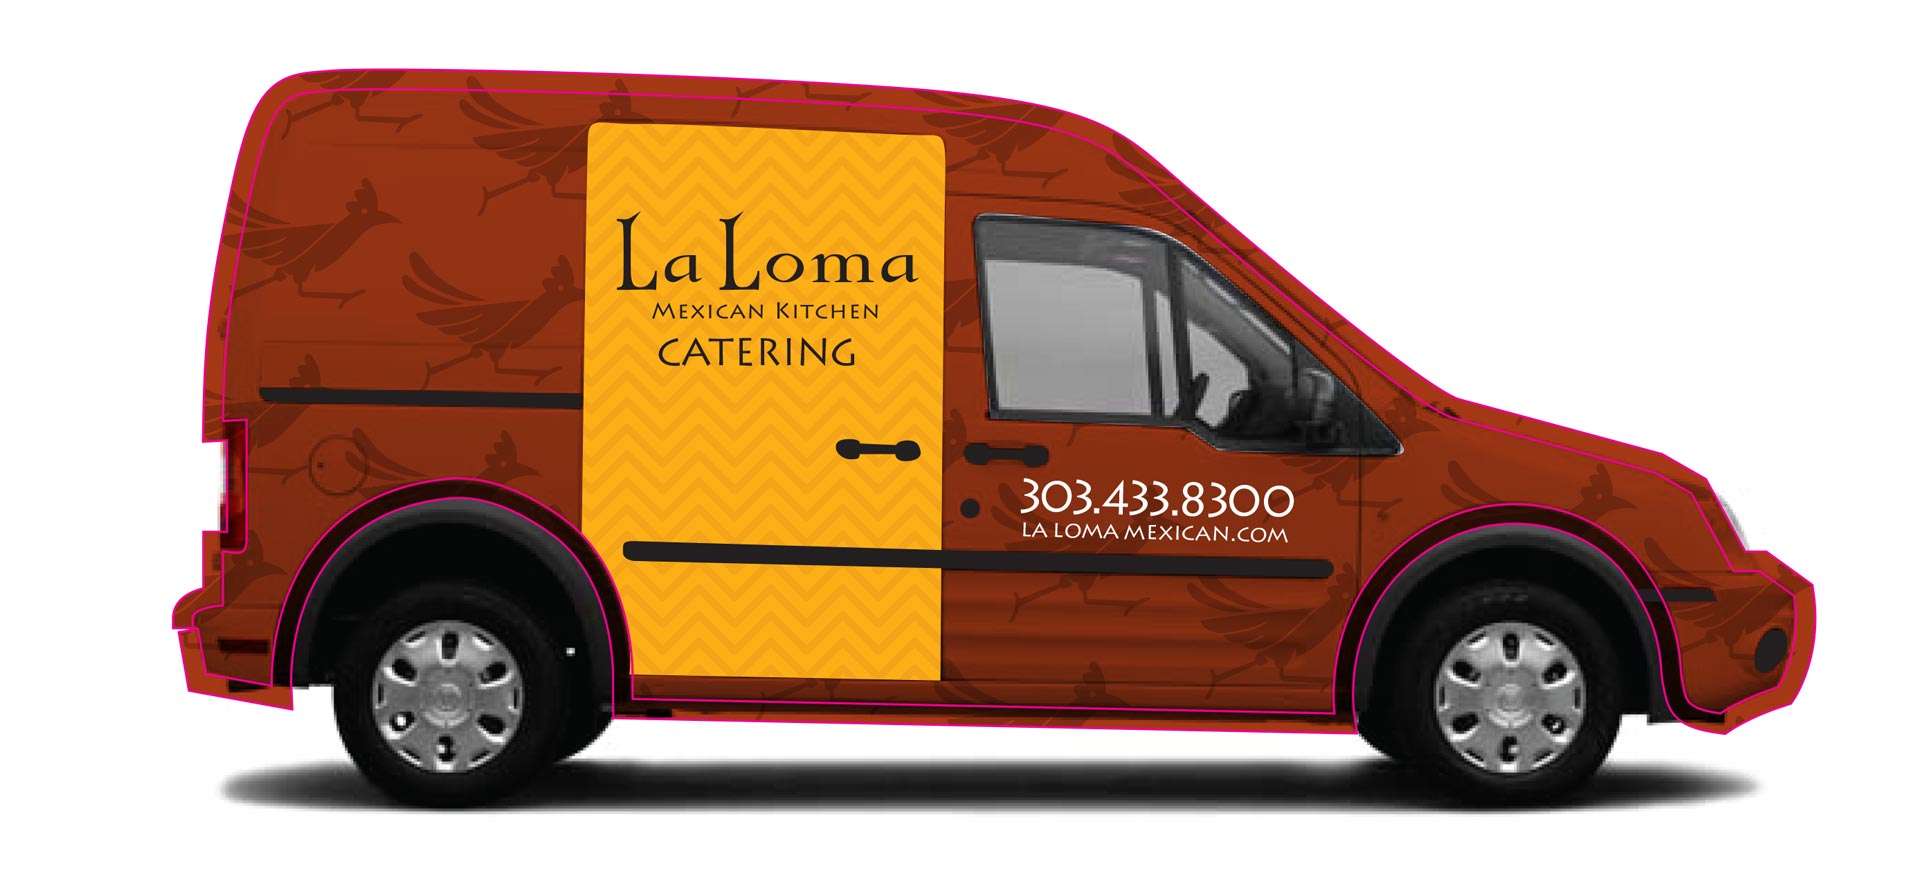 La-Loma-Catering-Van-Proposed-Design